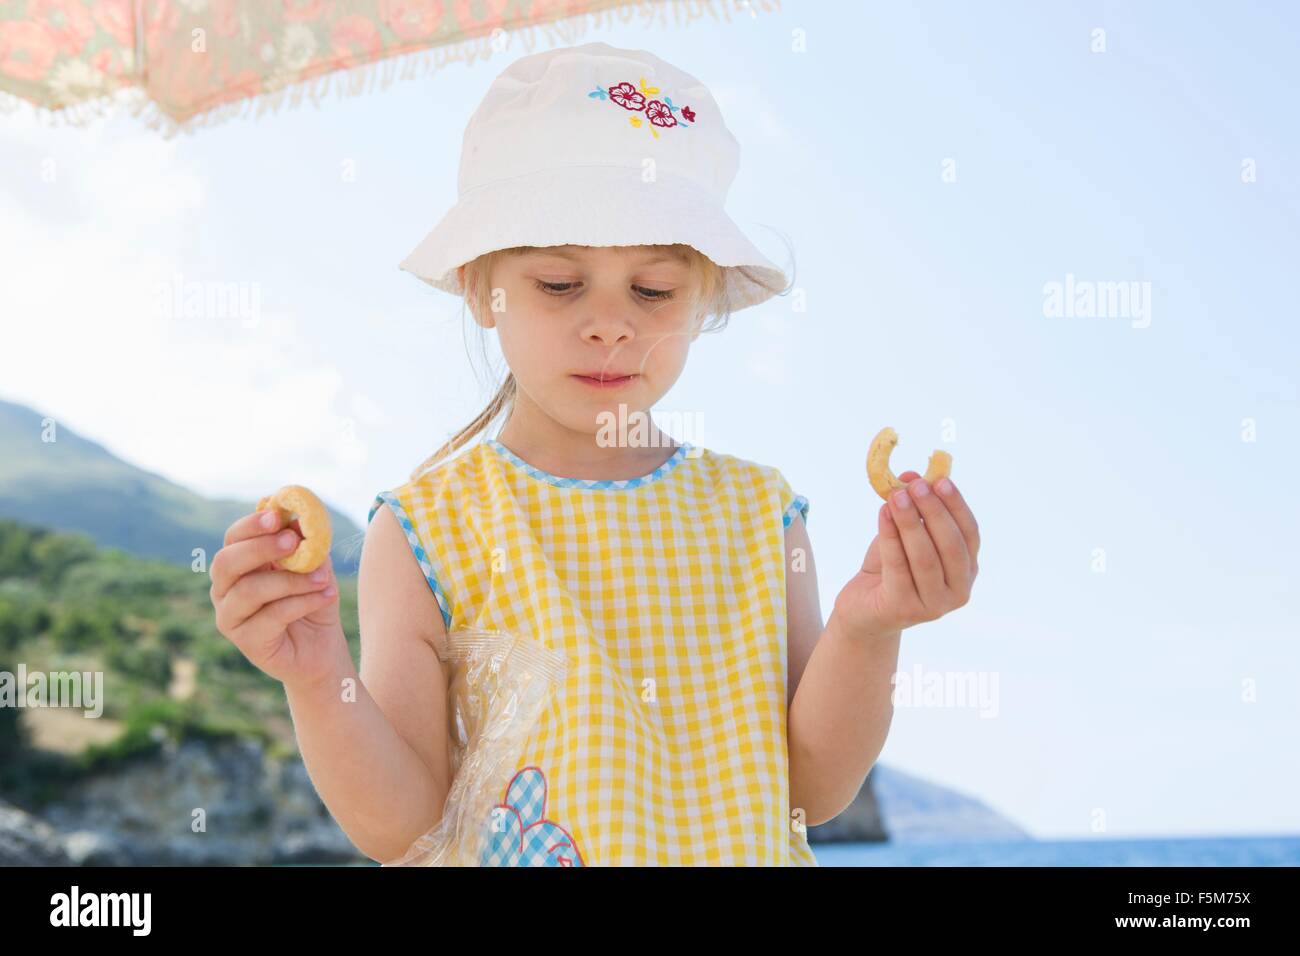 Girl wearing sunhat eating doughnut on beach Stock Photo